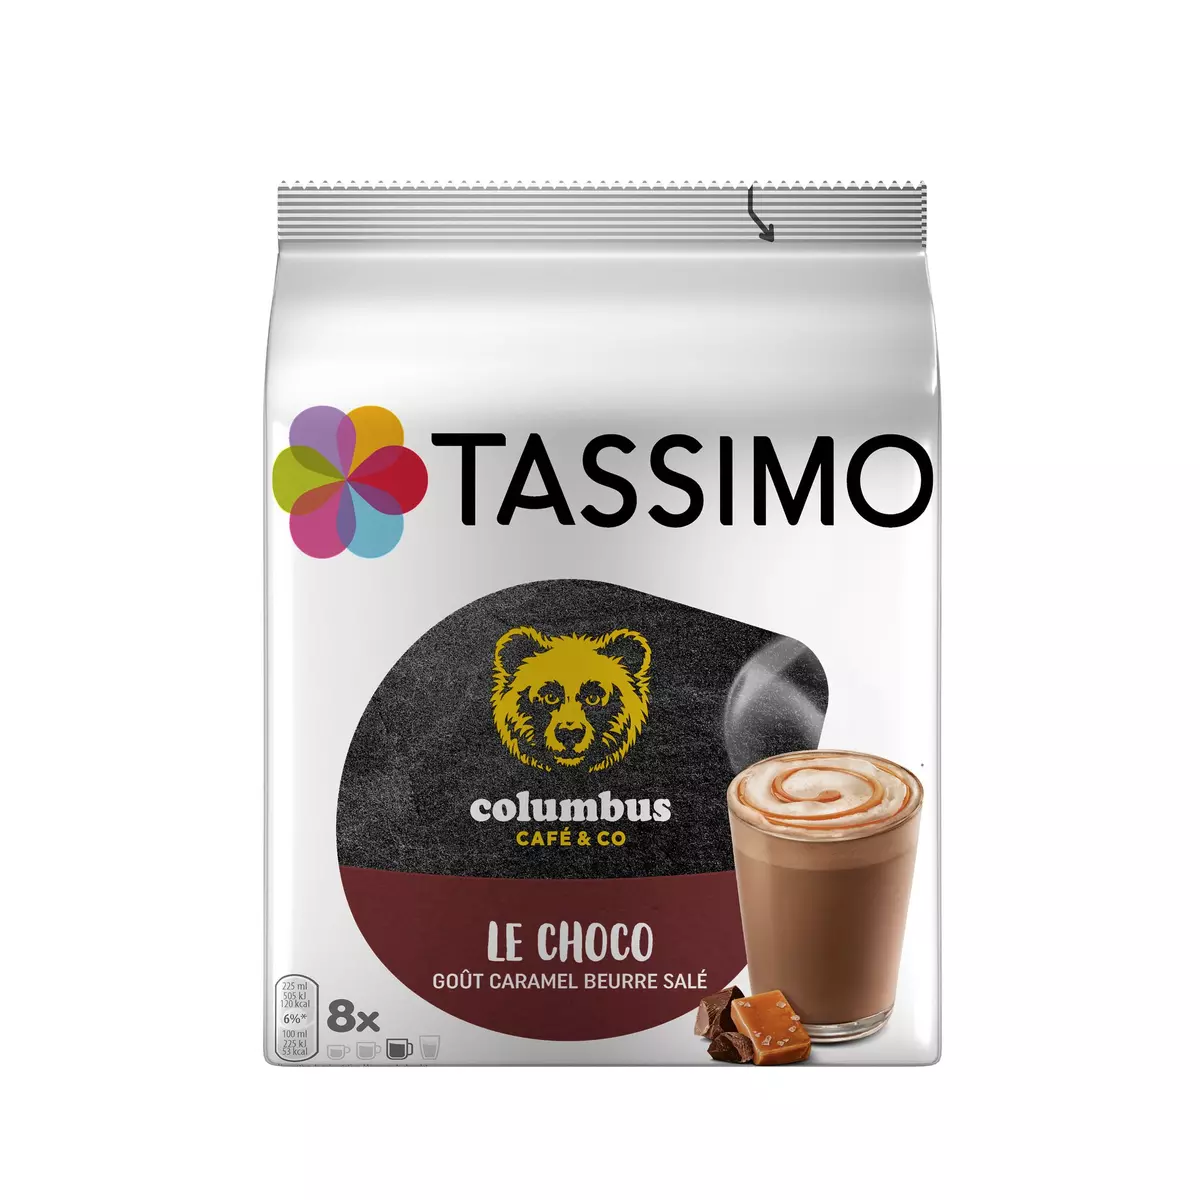 TASSIMO Dosettes de café Columbus Le Choco goût caramel beurre salé 8 dosettes 240g